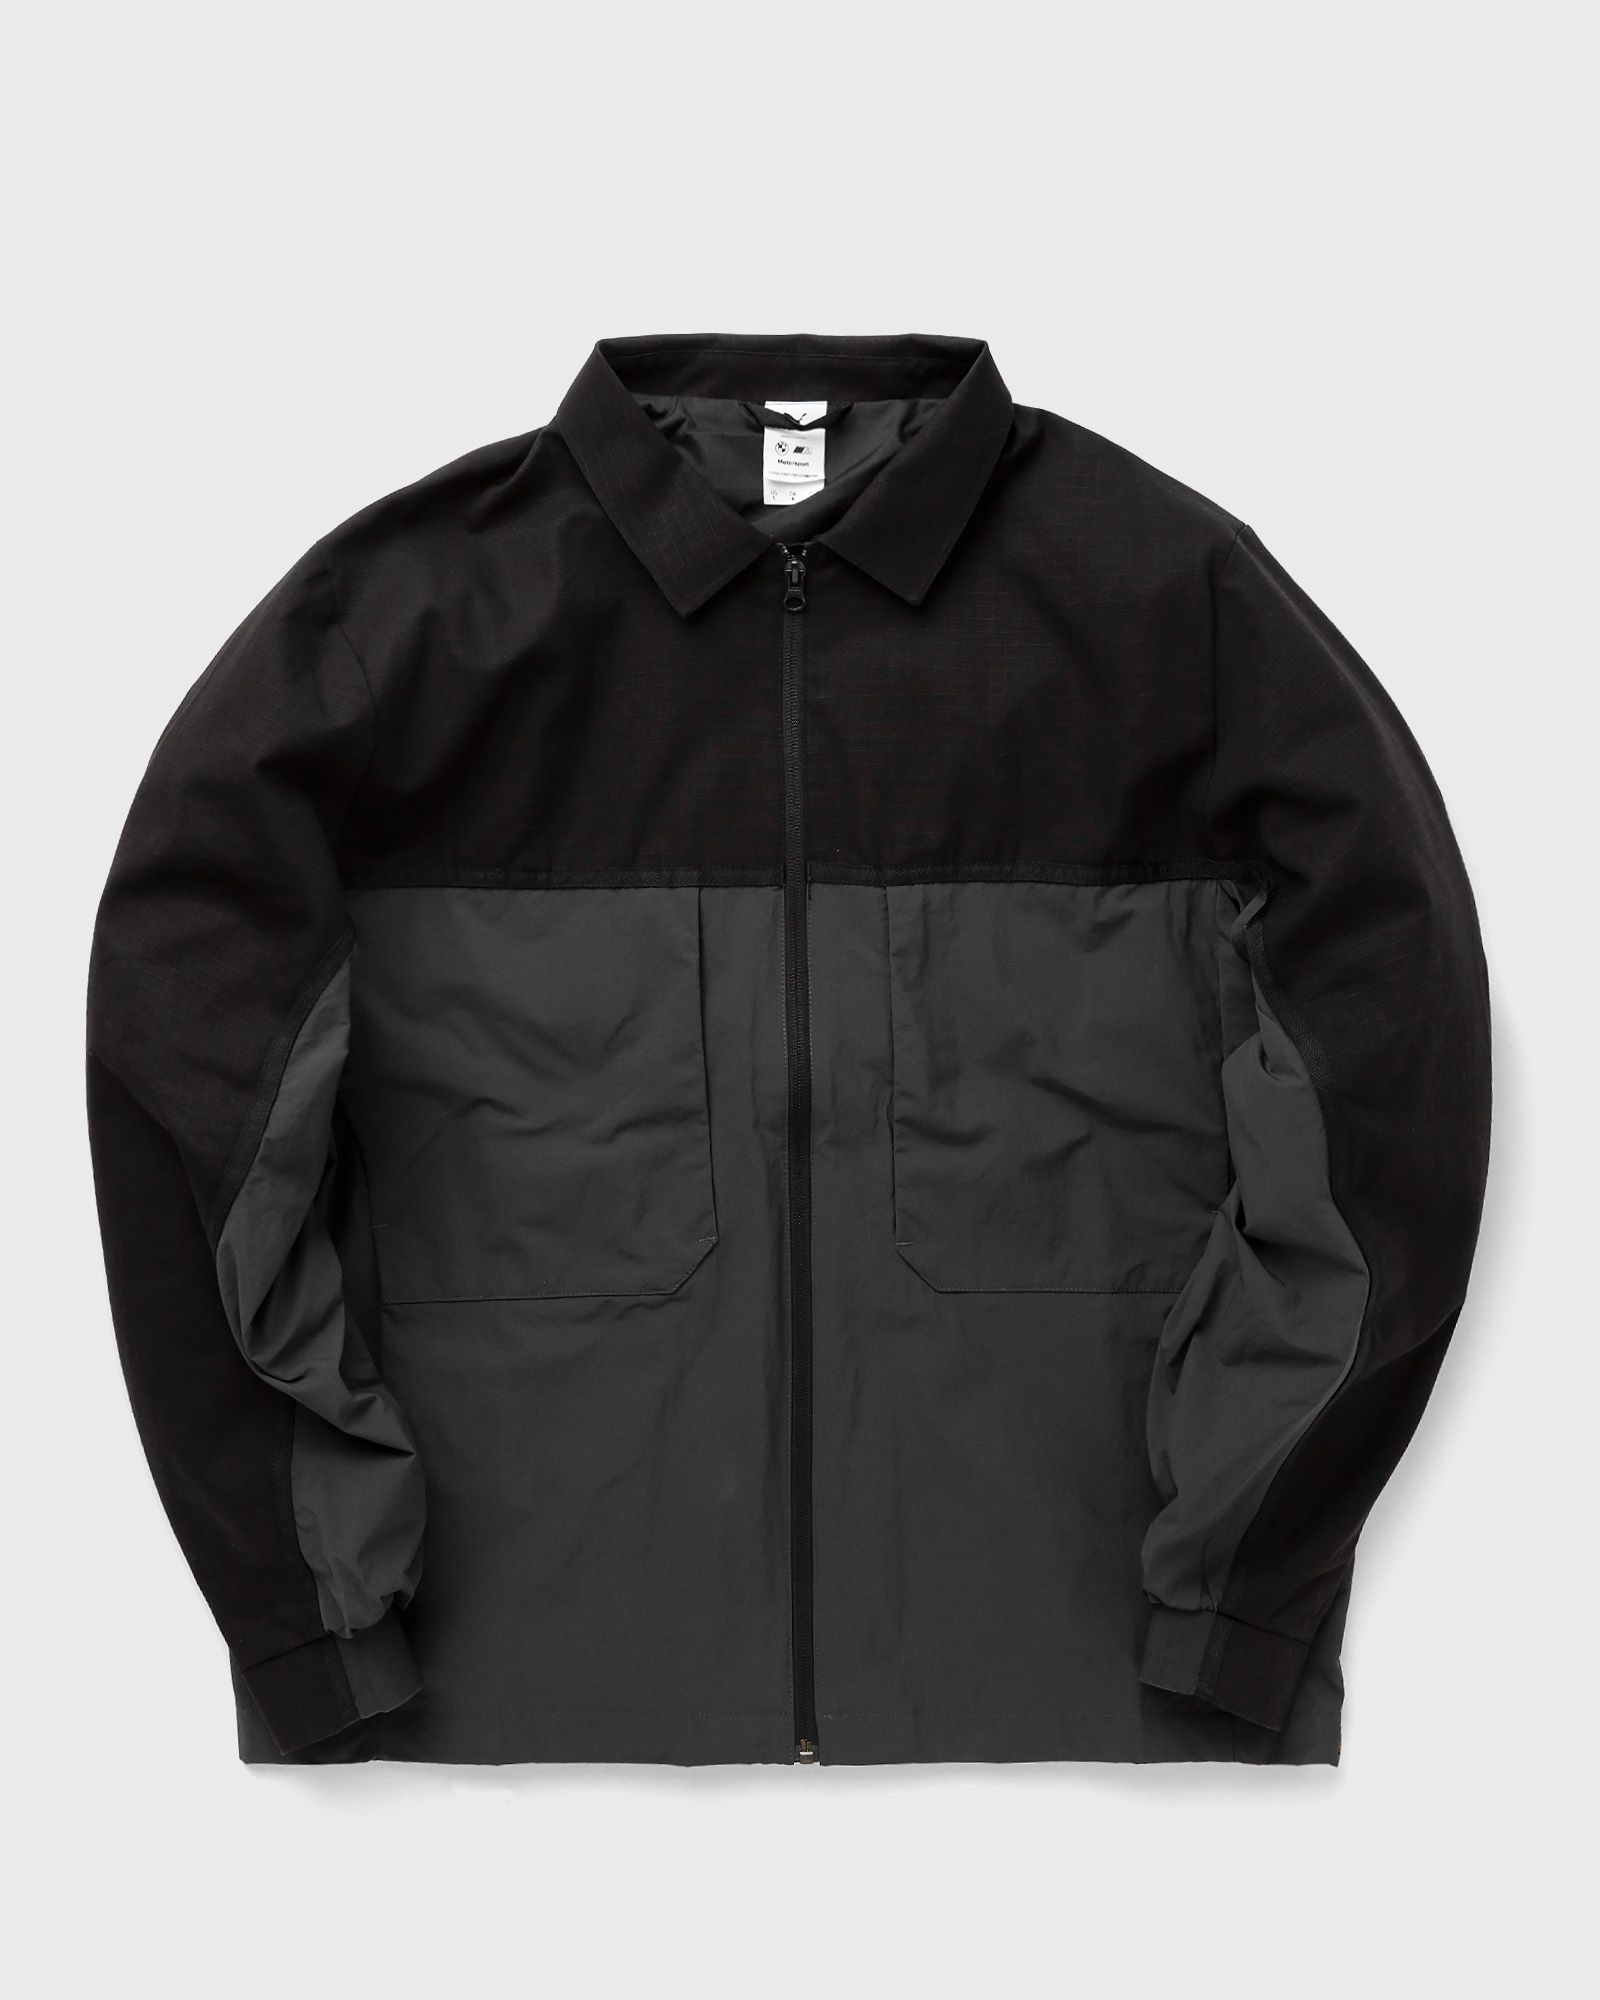 Puma - x bmw jacket men track jackets black in größe:xl